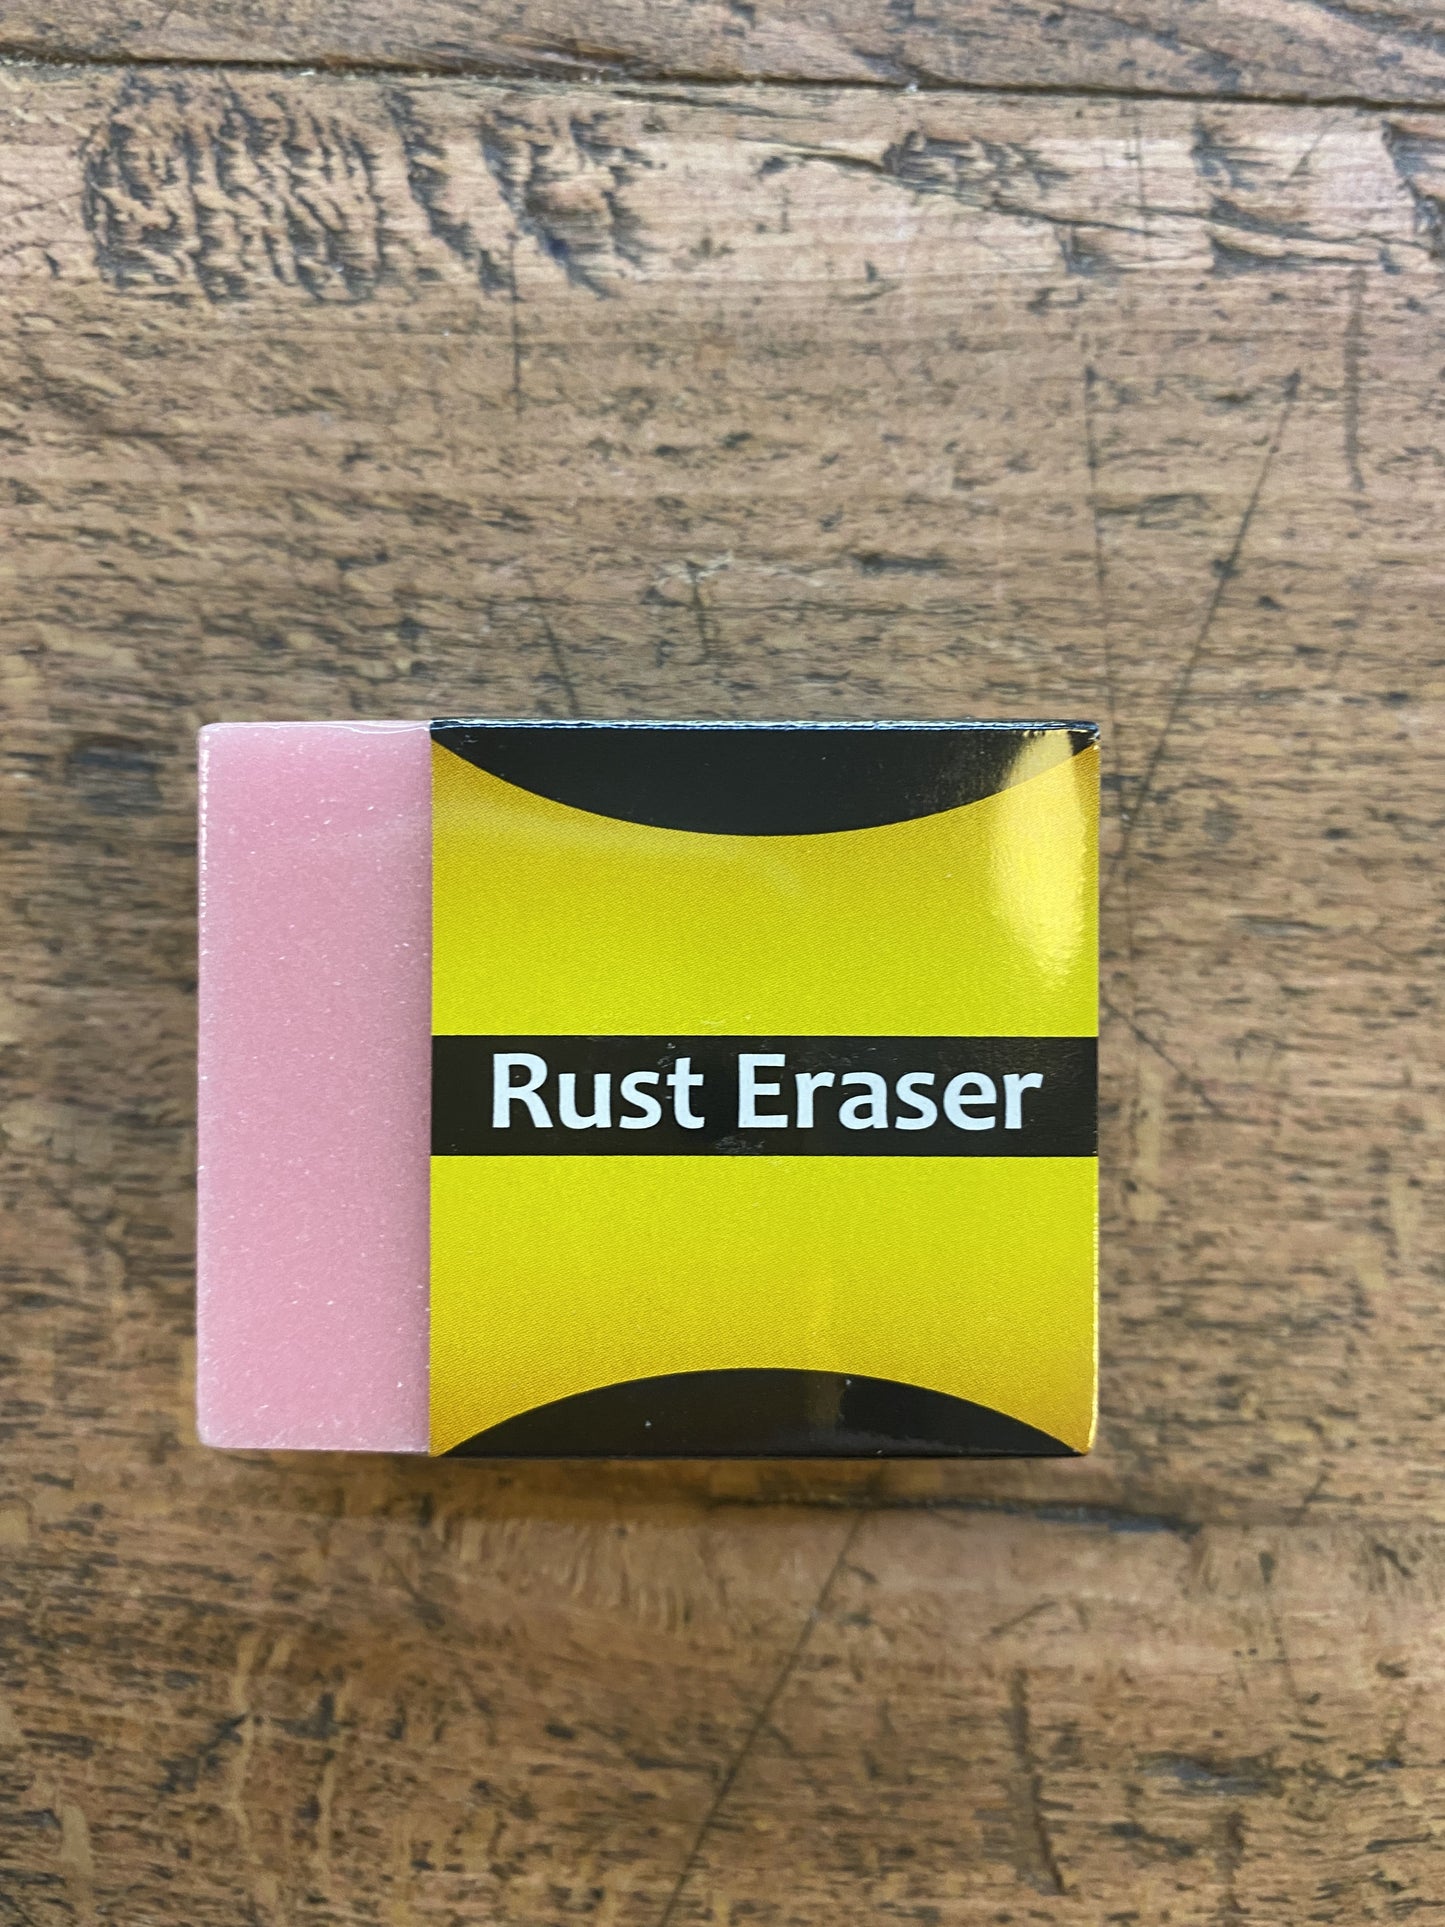 Rust eraser